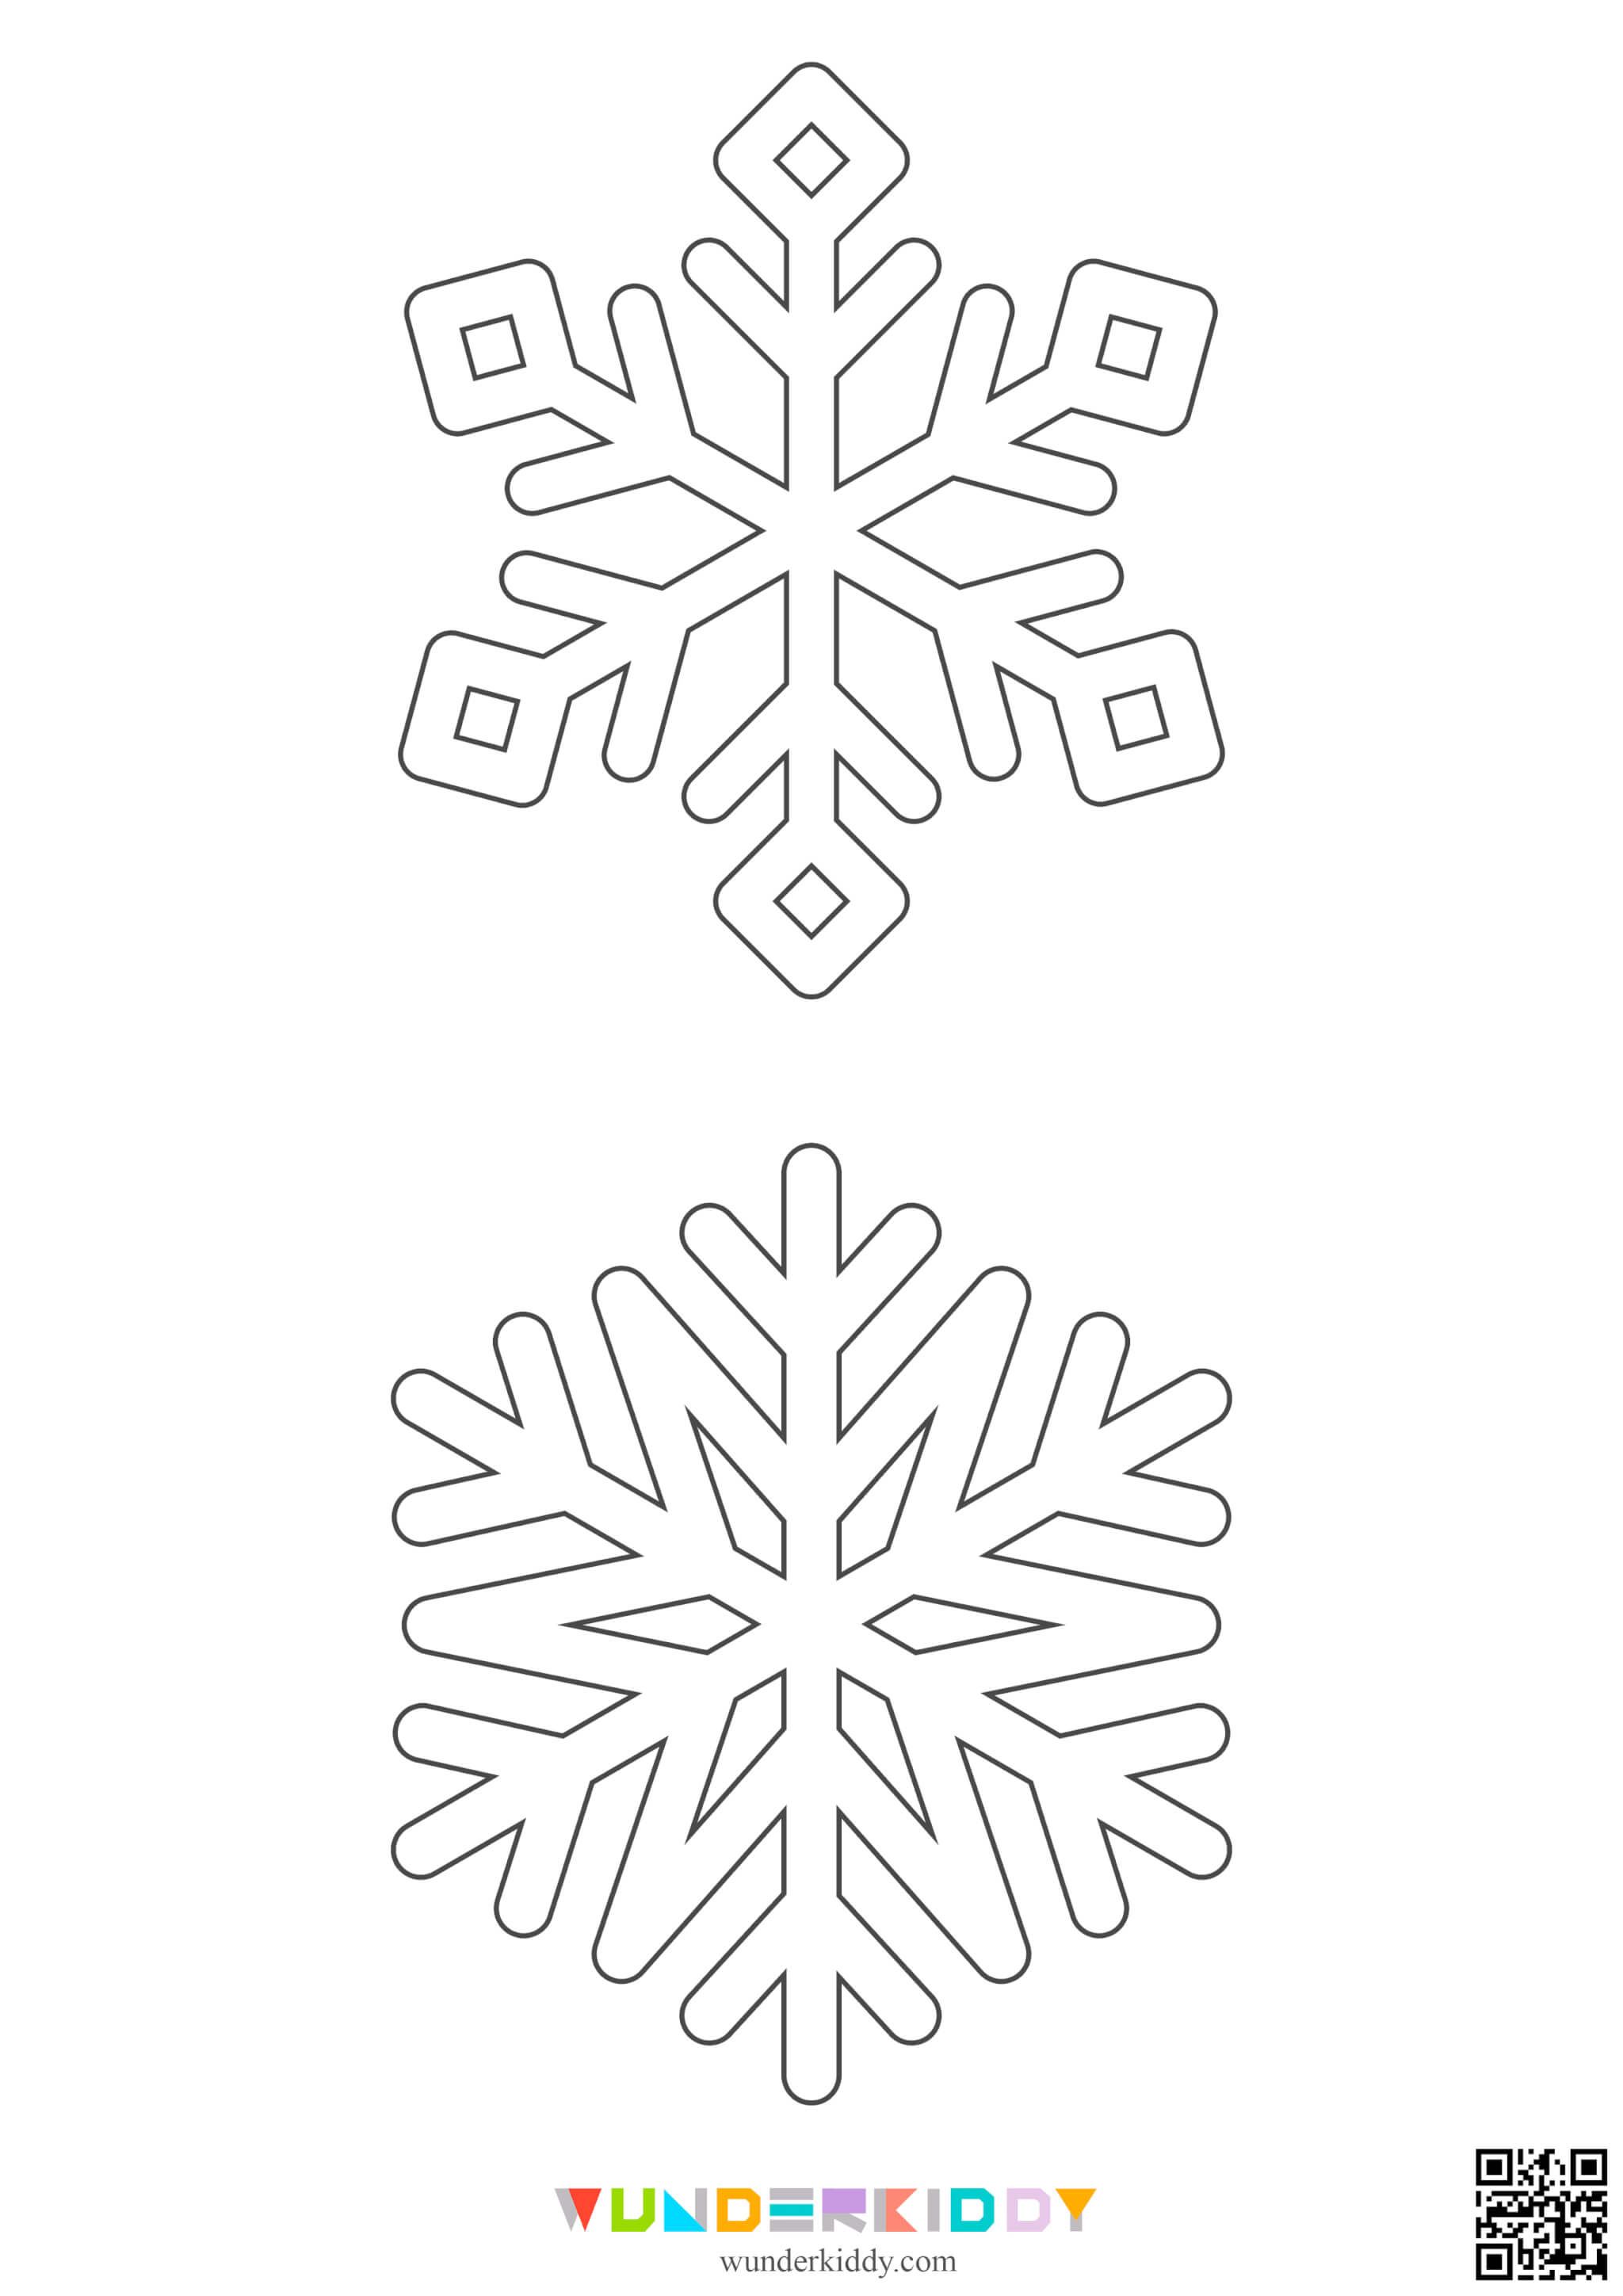 Snowflake Stencil Patterns - Image 20